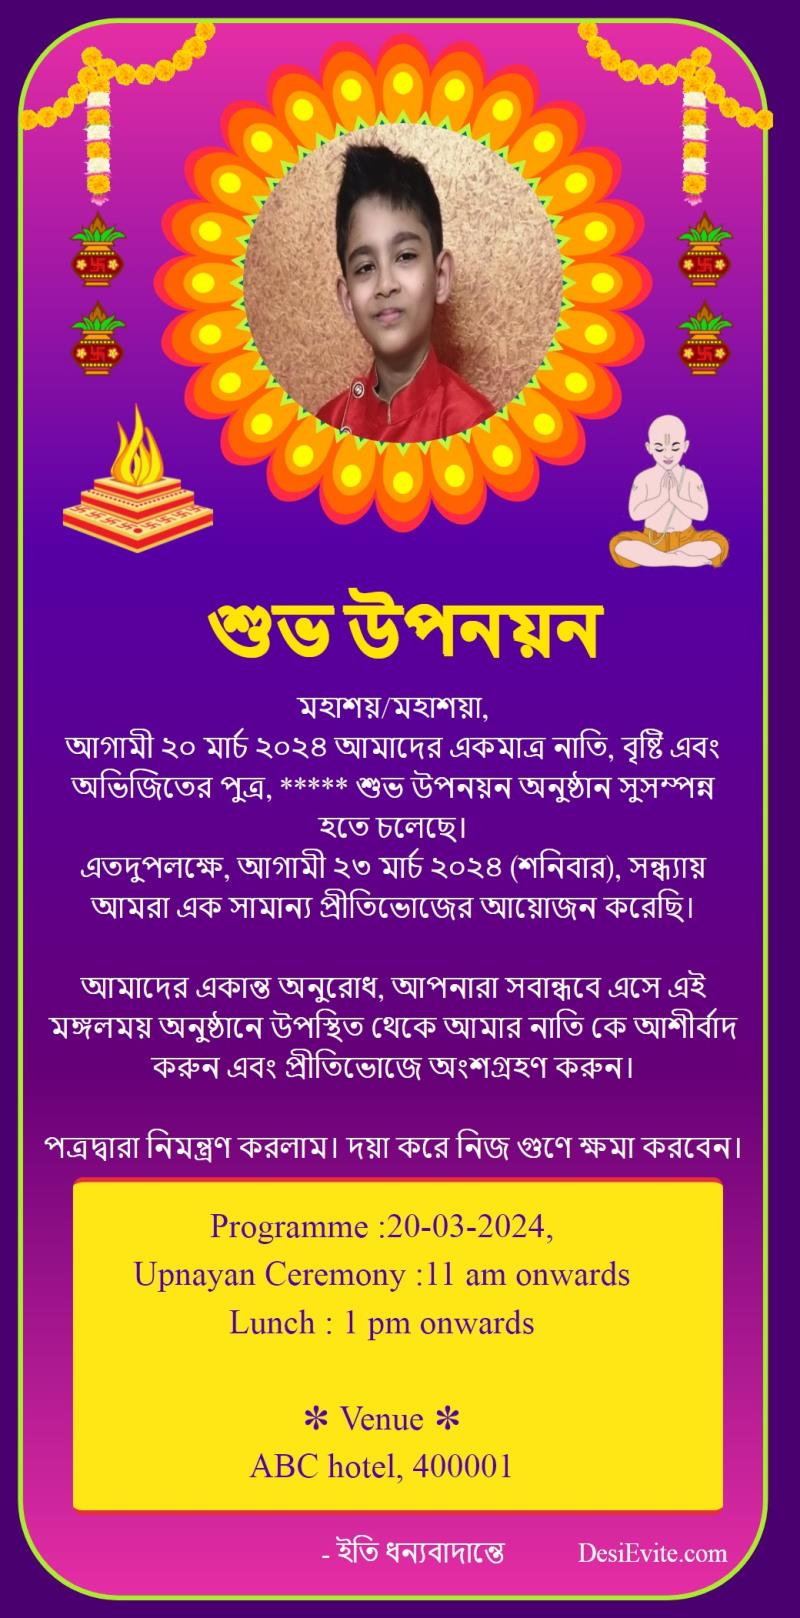 Bengali Upnayan yagnopavit invitation card 157